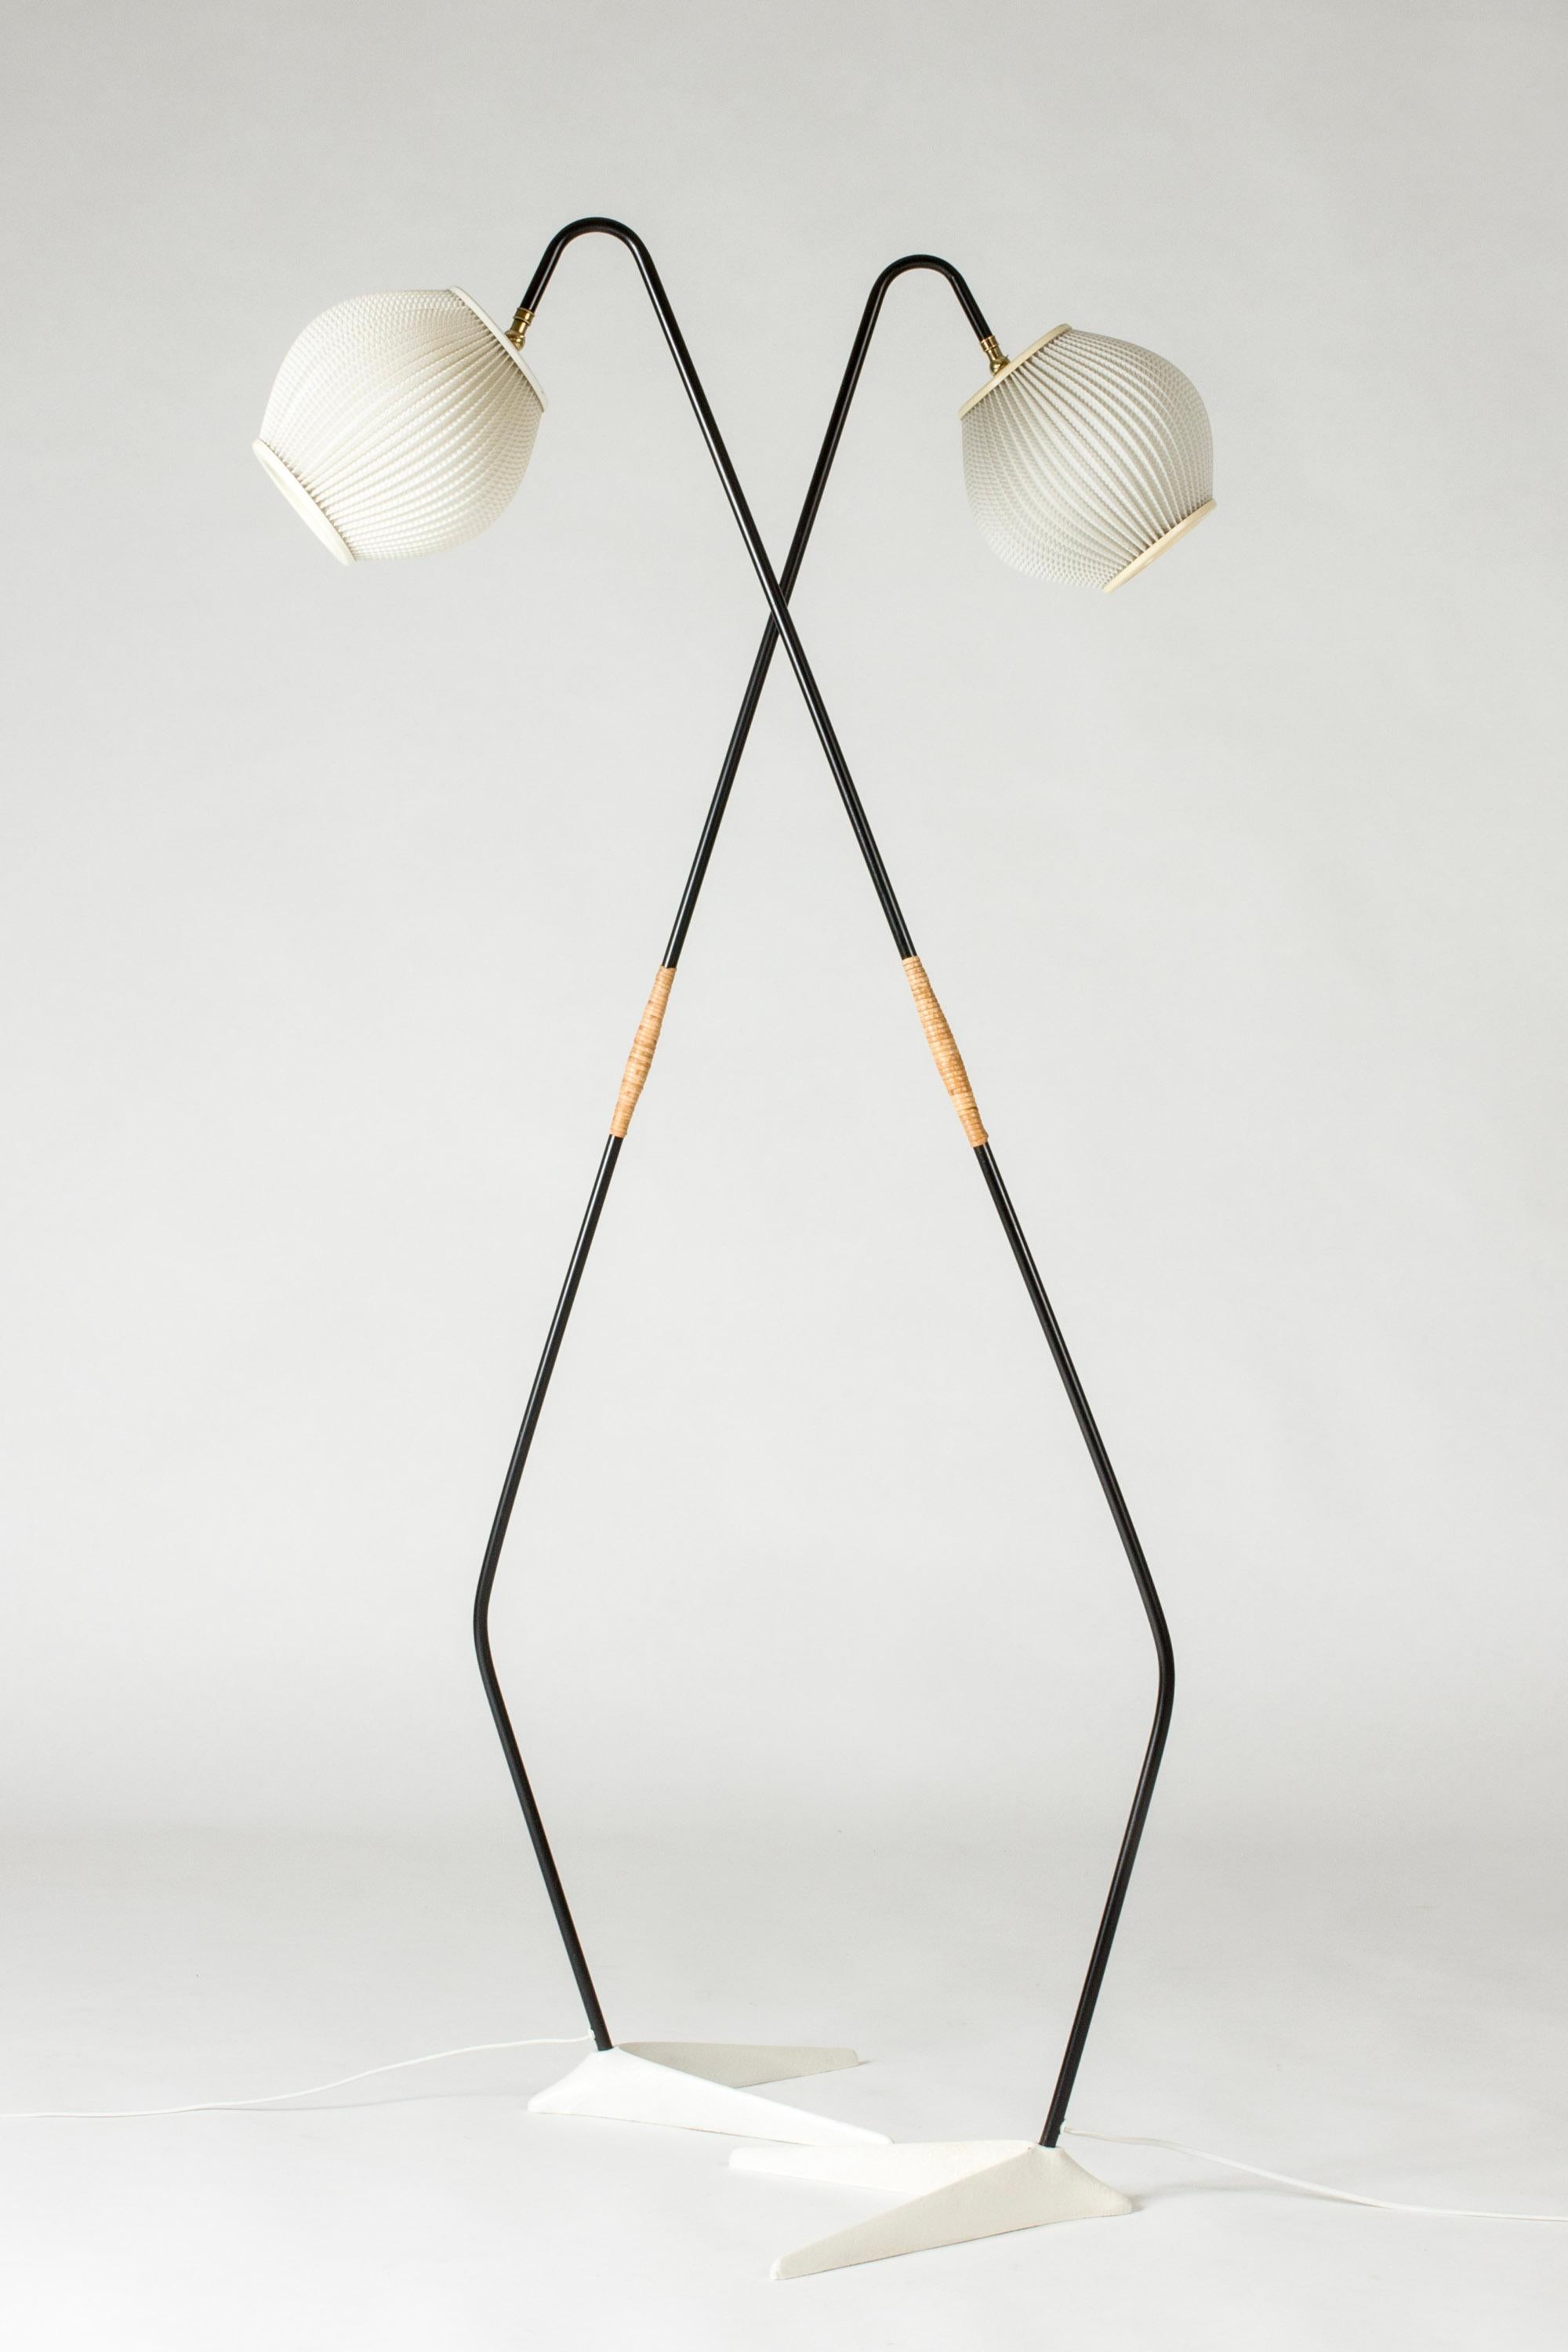 Scandinavian Modern Pair of Modernist floor lamps by Svend Aage Holm Sørensen, Denmark, 1950s For Sale